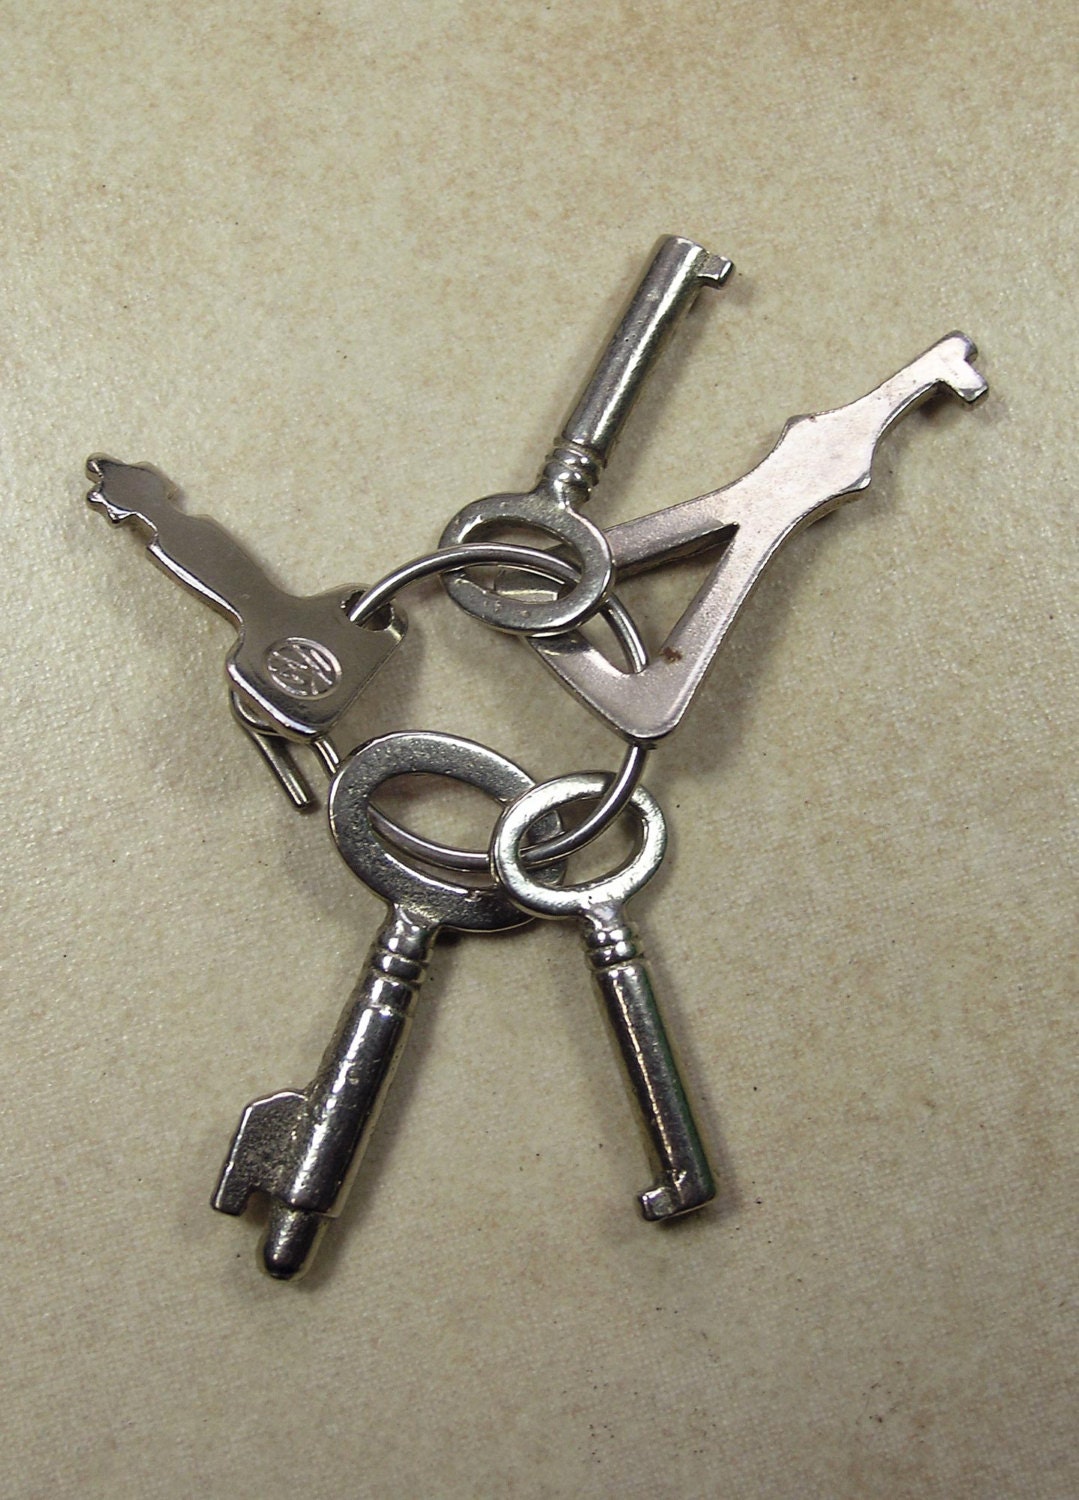 Lot of 12 Vintage Skeleton Keys, Skeleton Key Lot, Keys Found Objects,  Ornate Metal Keys 